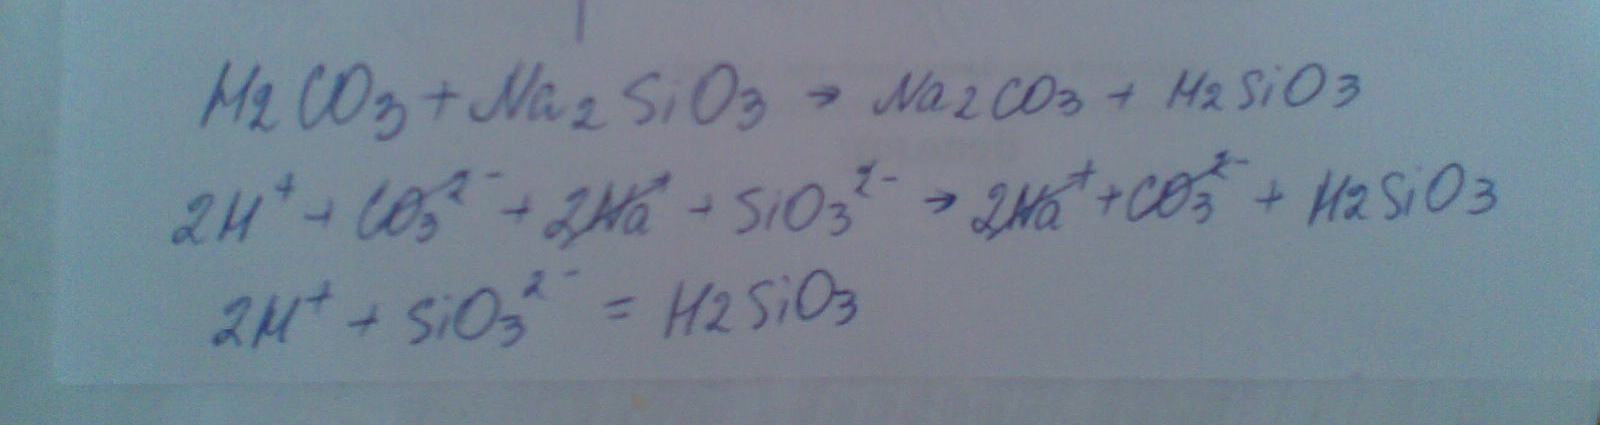 Sio 2 koh. 2h sio3 h2sio3 молекулярное уравнение. H2sio3 прокалили.